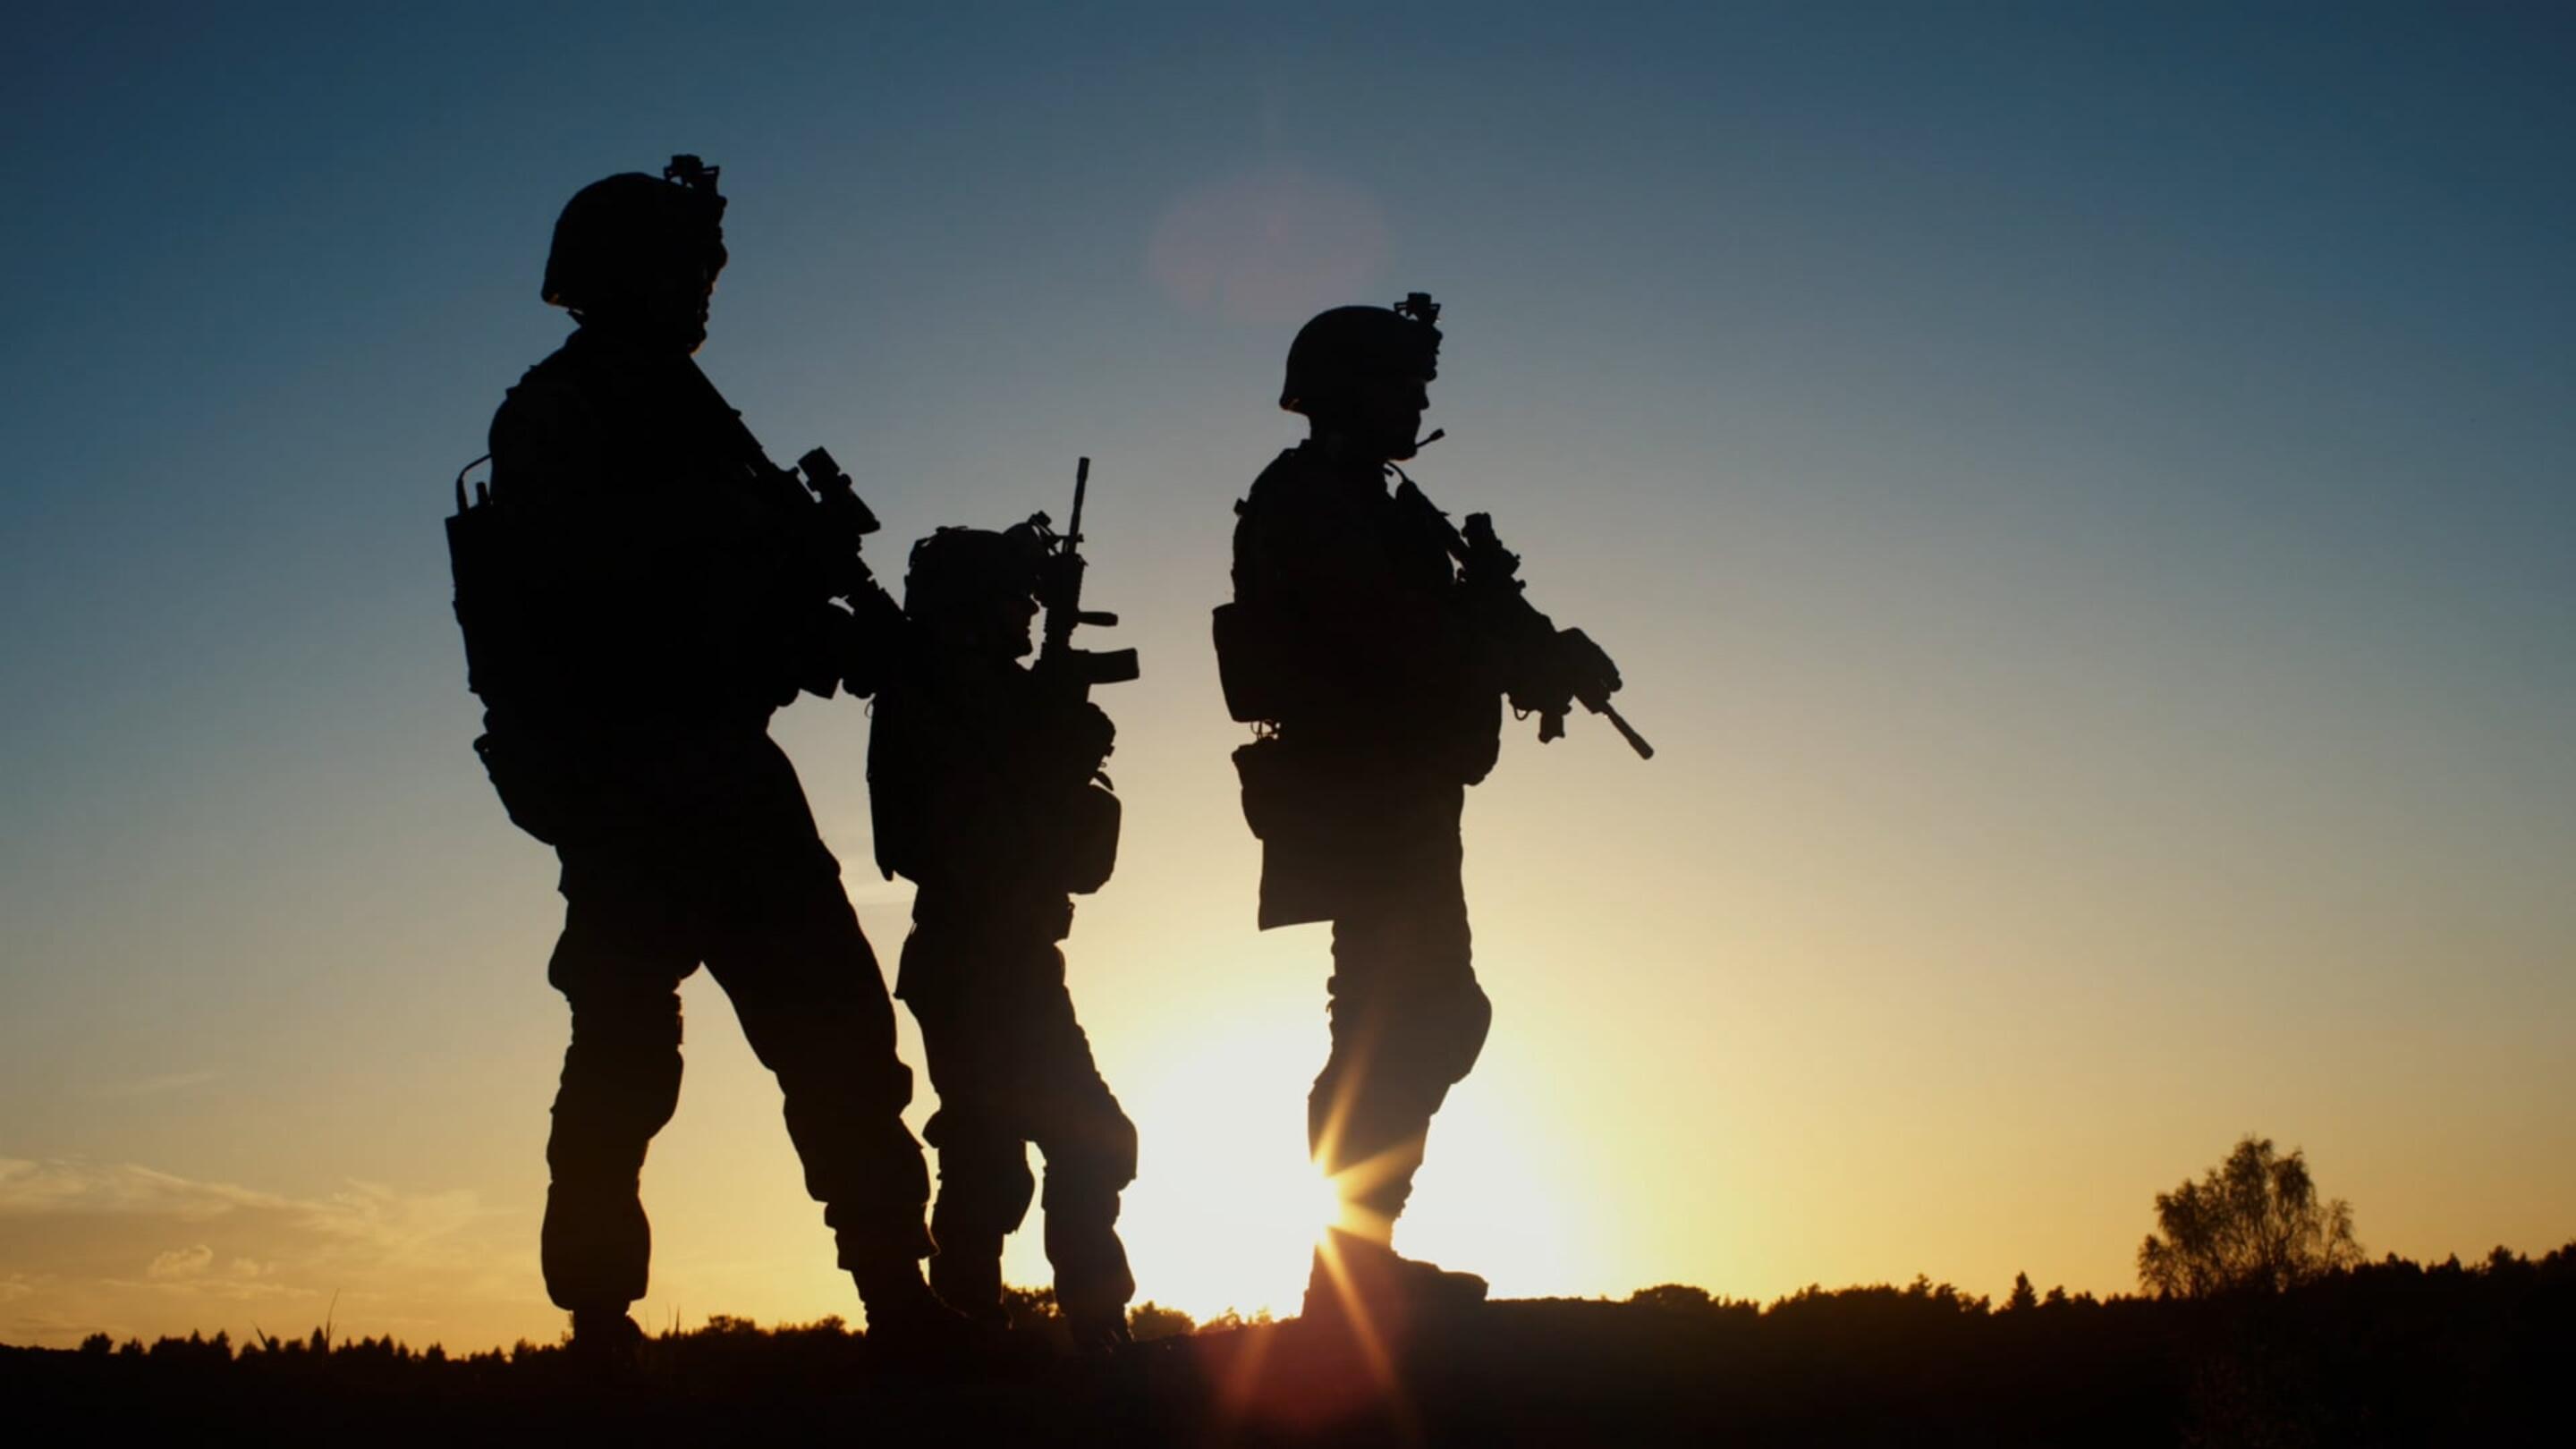 Katonai - Csapatok Katonai, fegyvert tartó katonák csoportja